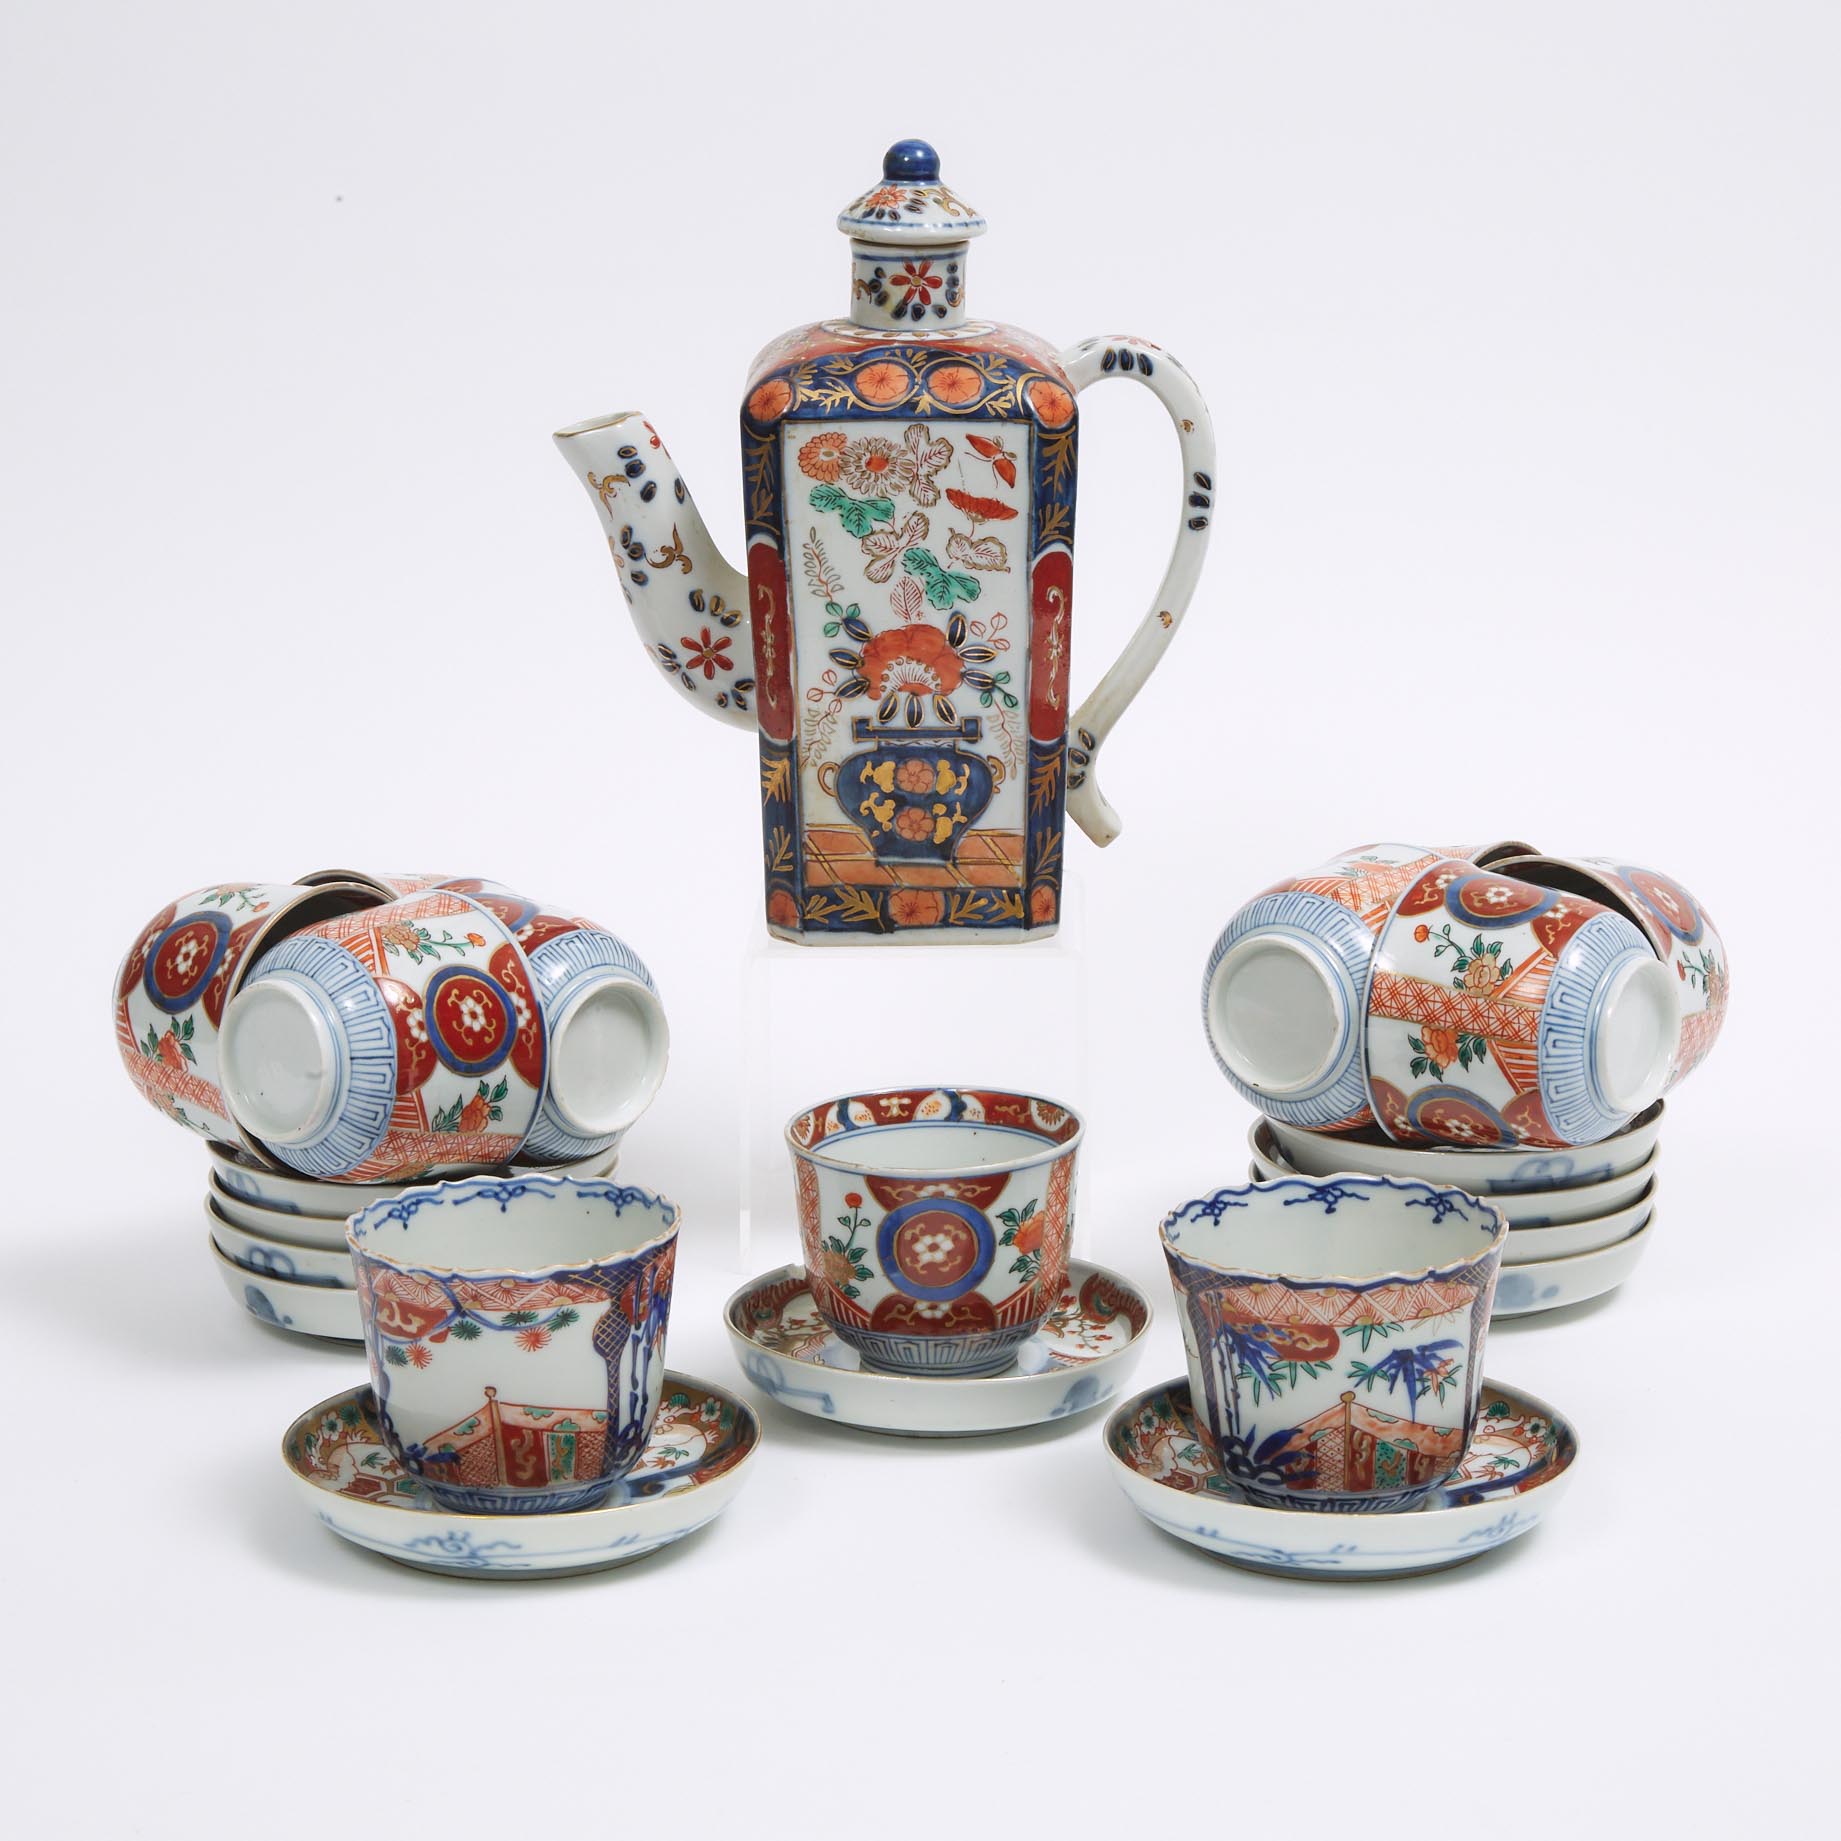 A Group of Twenty-Three Imari Dishes, Cups, and Teapot, Edo/Meiji Period